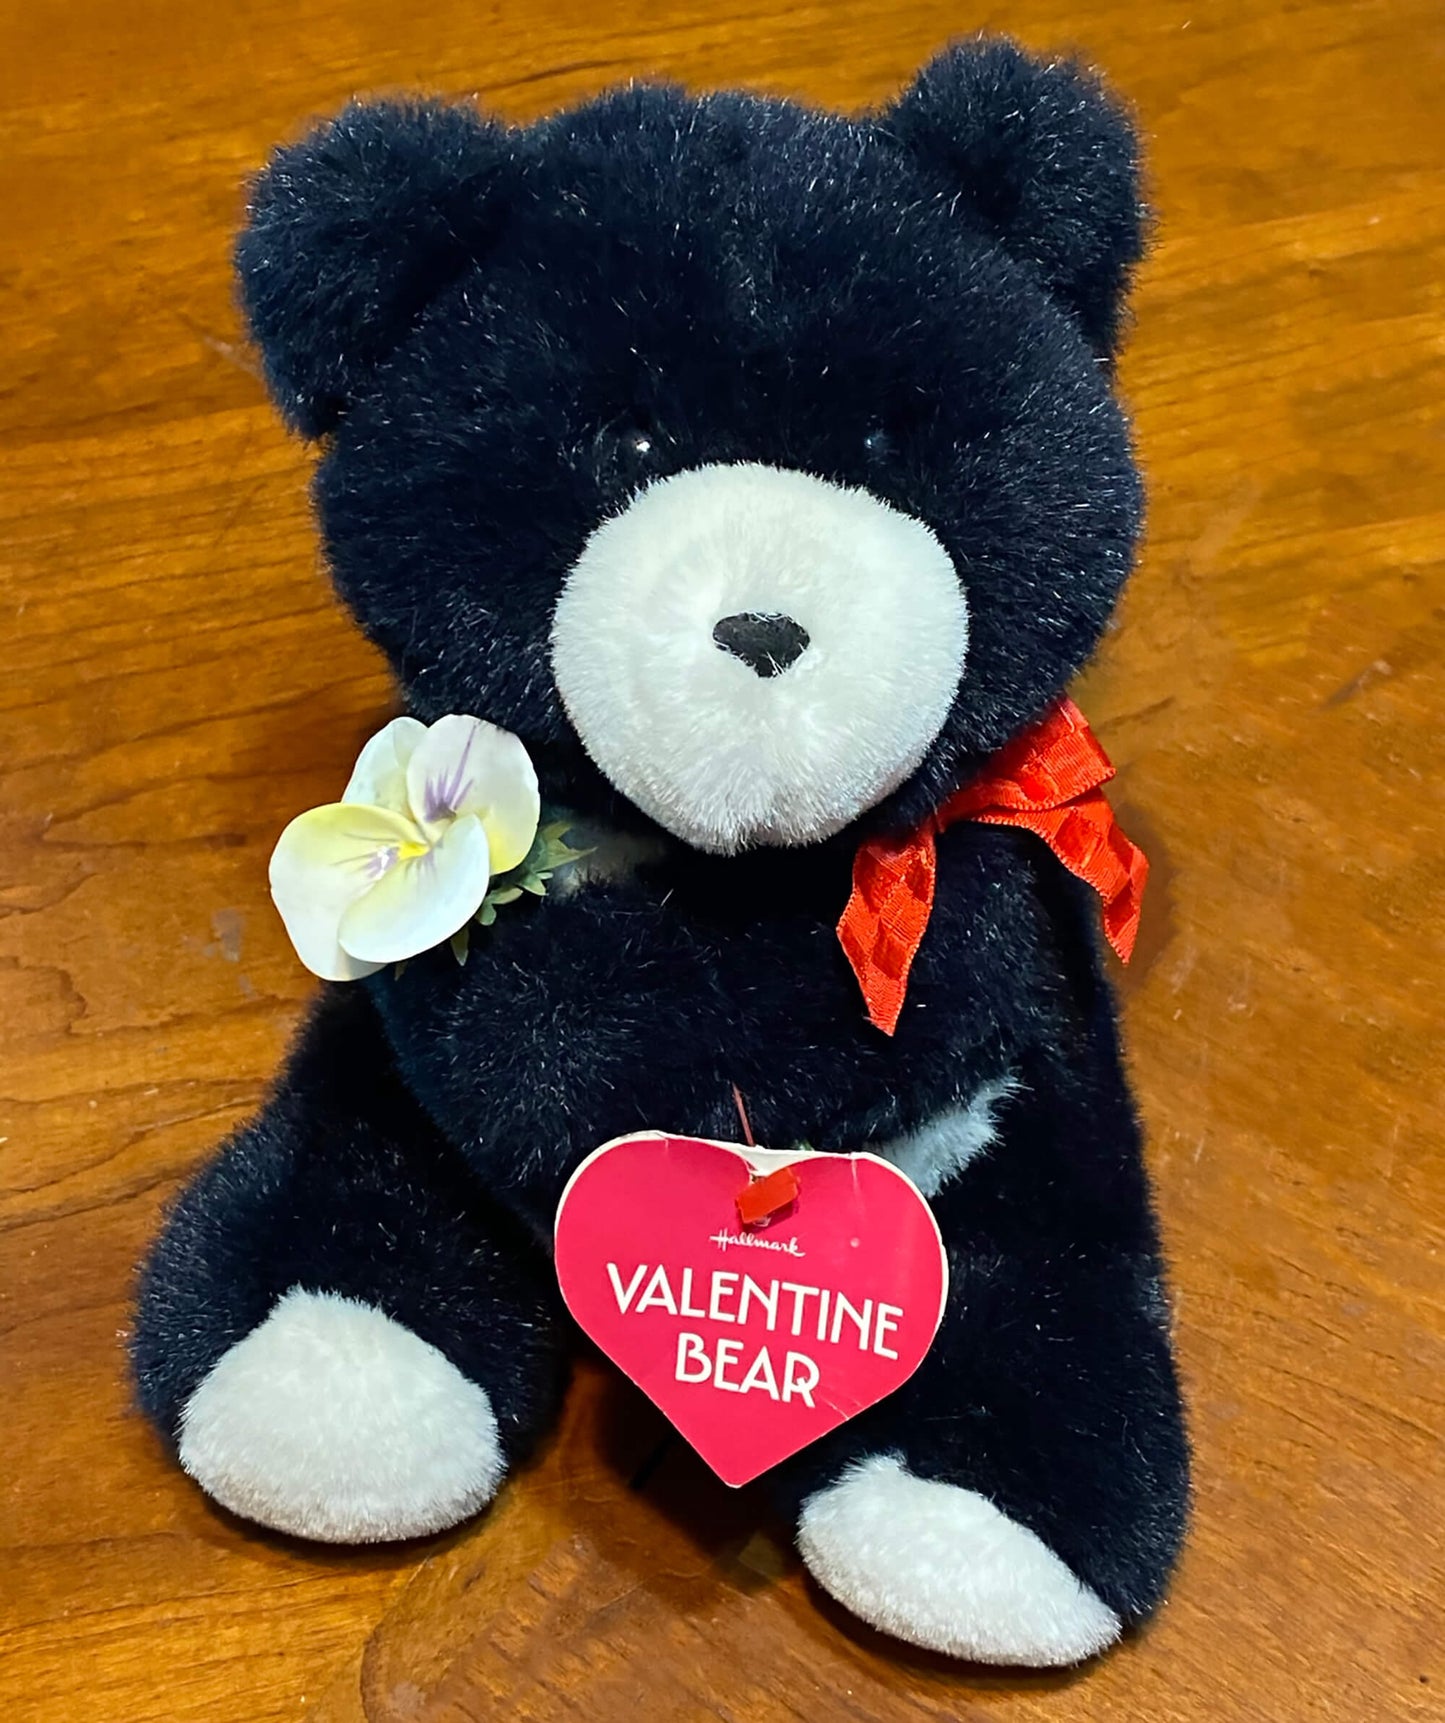 Hallmark-Valentine-Black-Panda-Bear-front-view-Hallmark-Valentine-Black-Panda-Bear-front-view